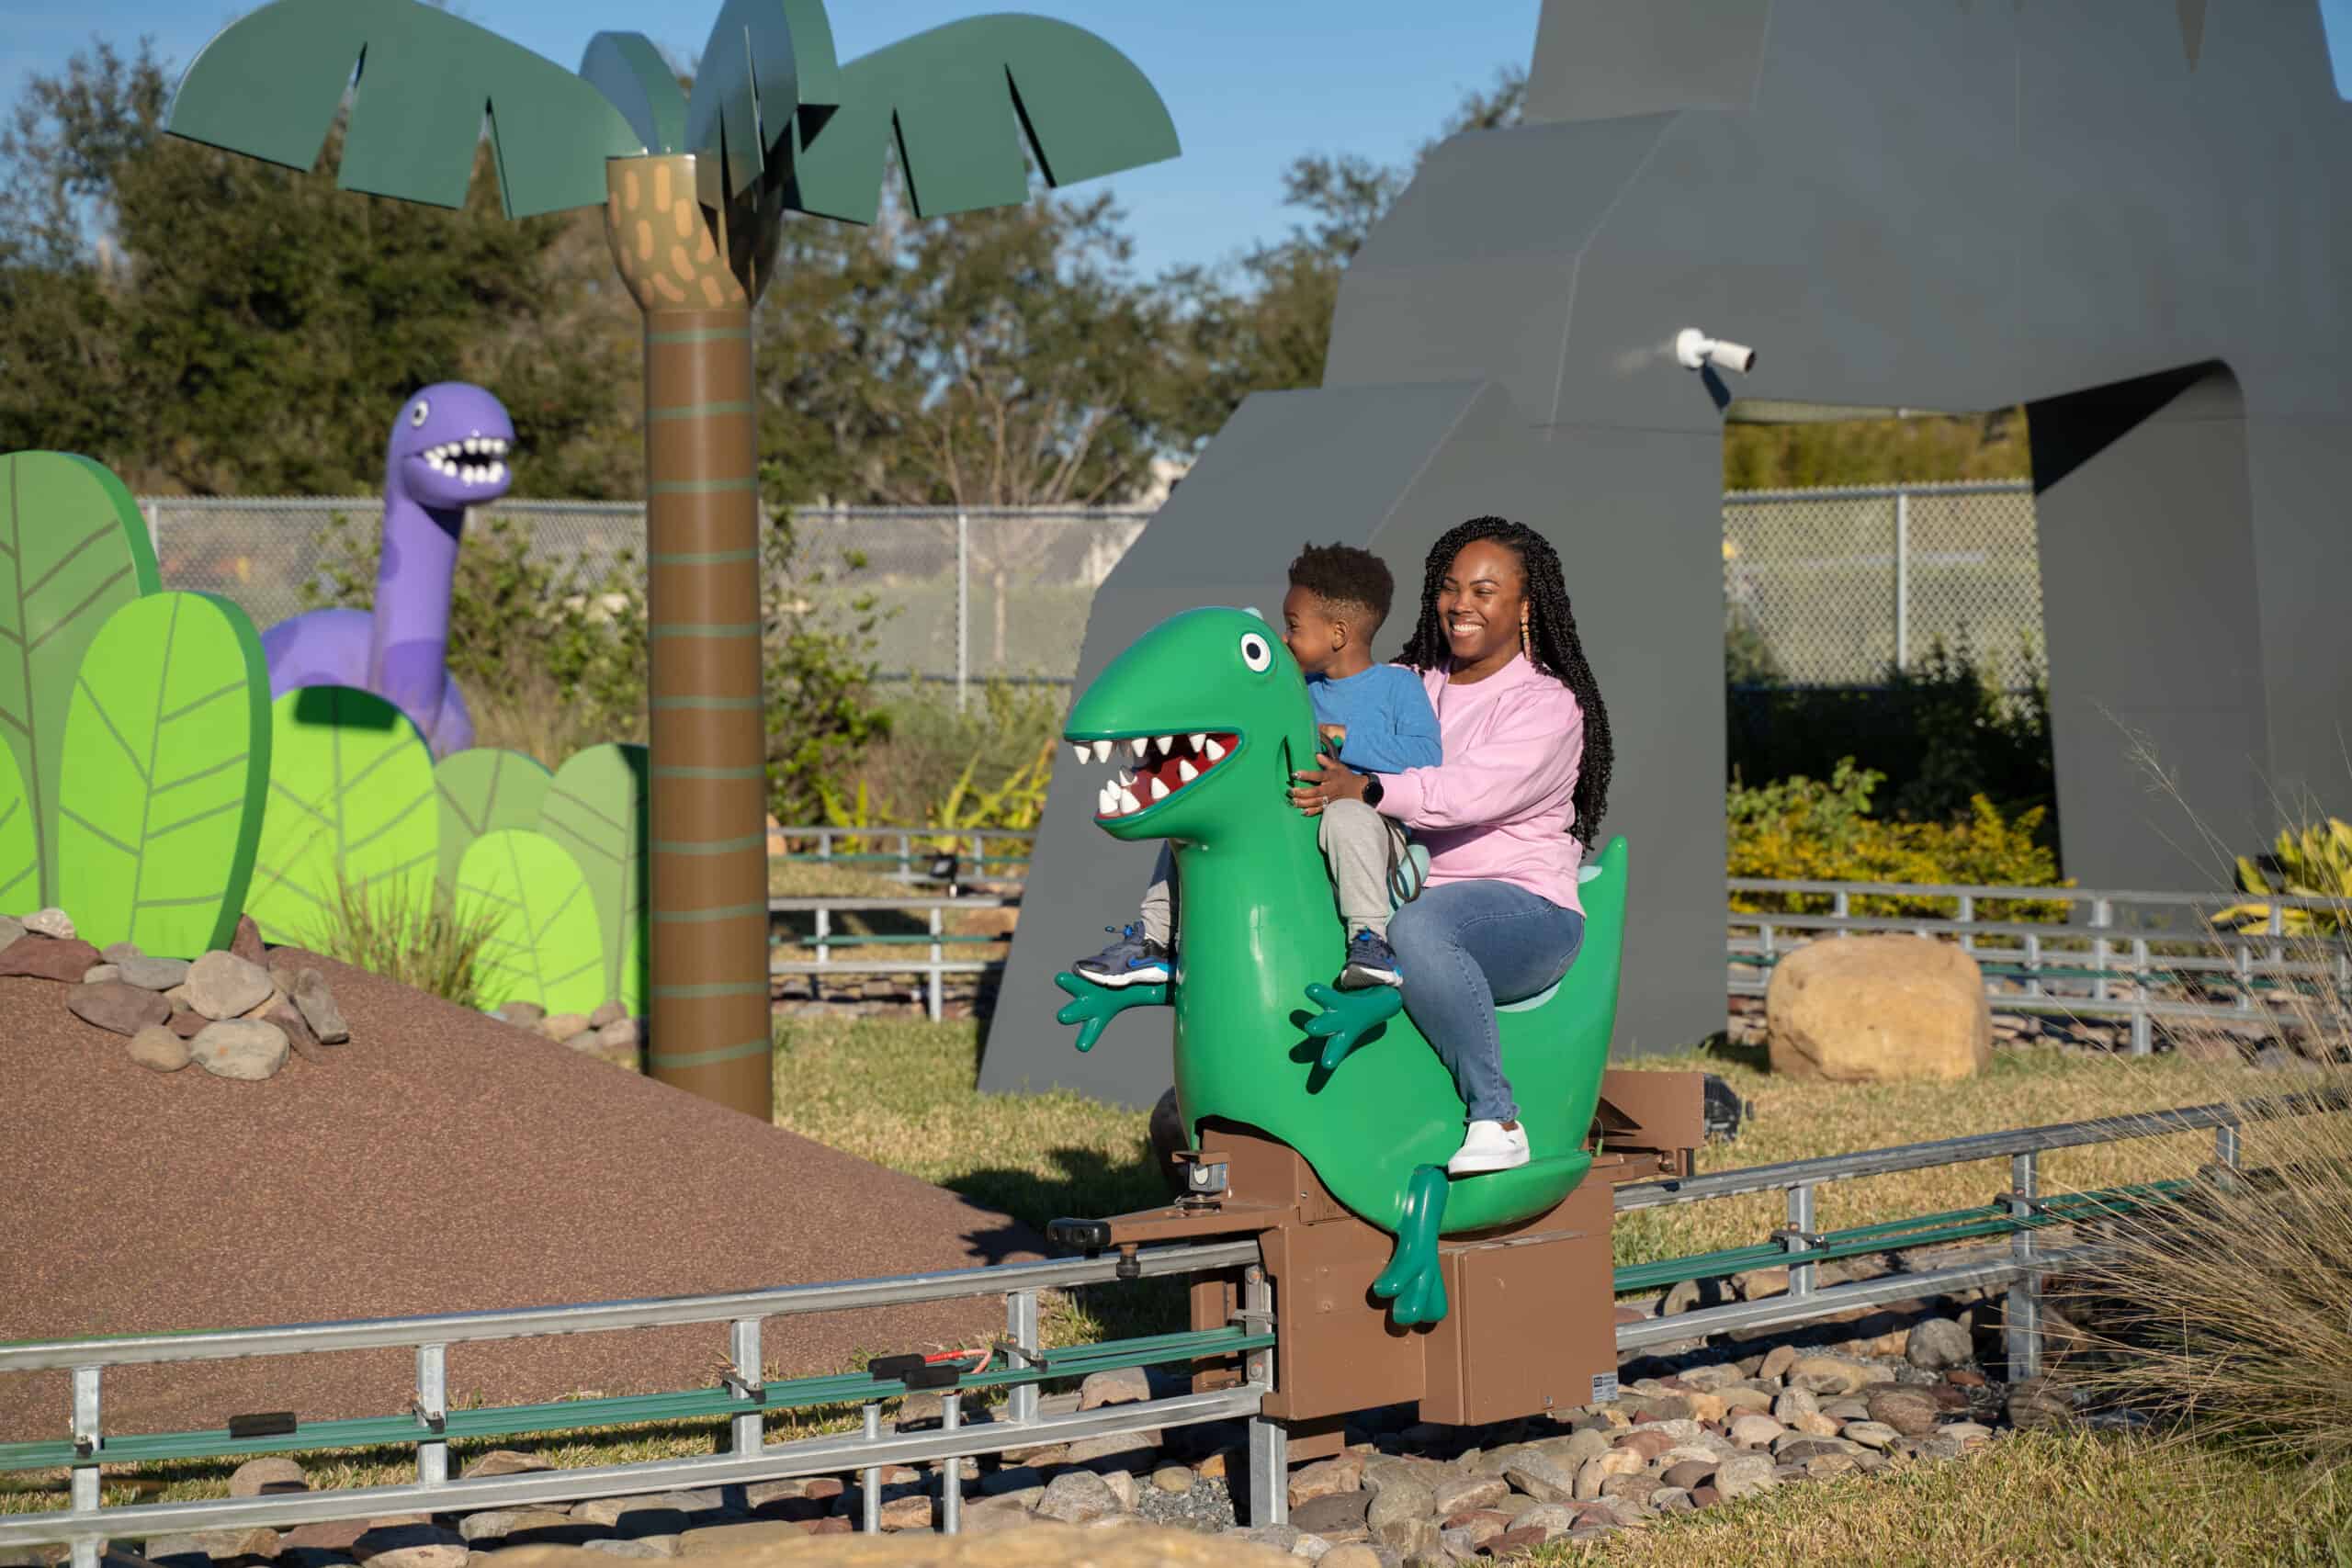 Peppa Pig Theme Park - Visit Central Florida